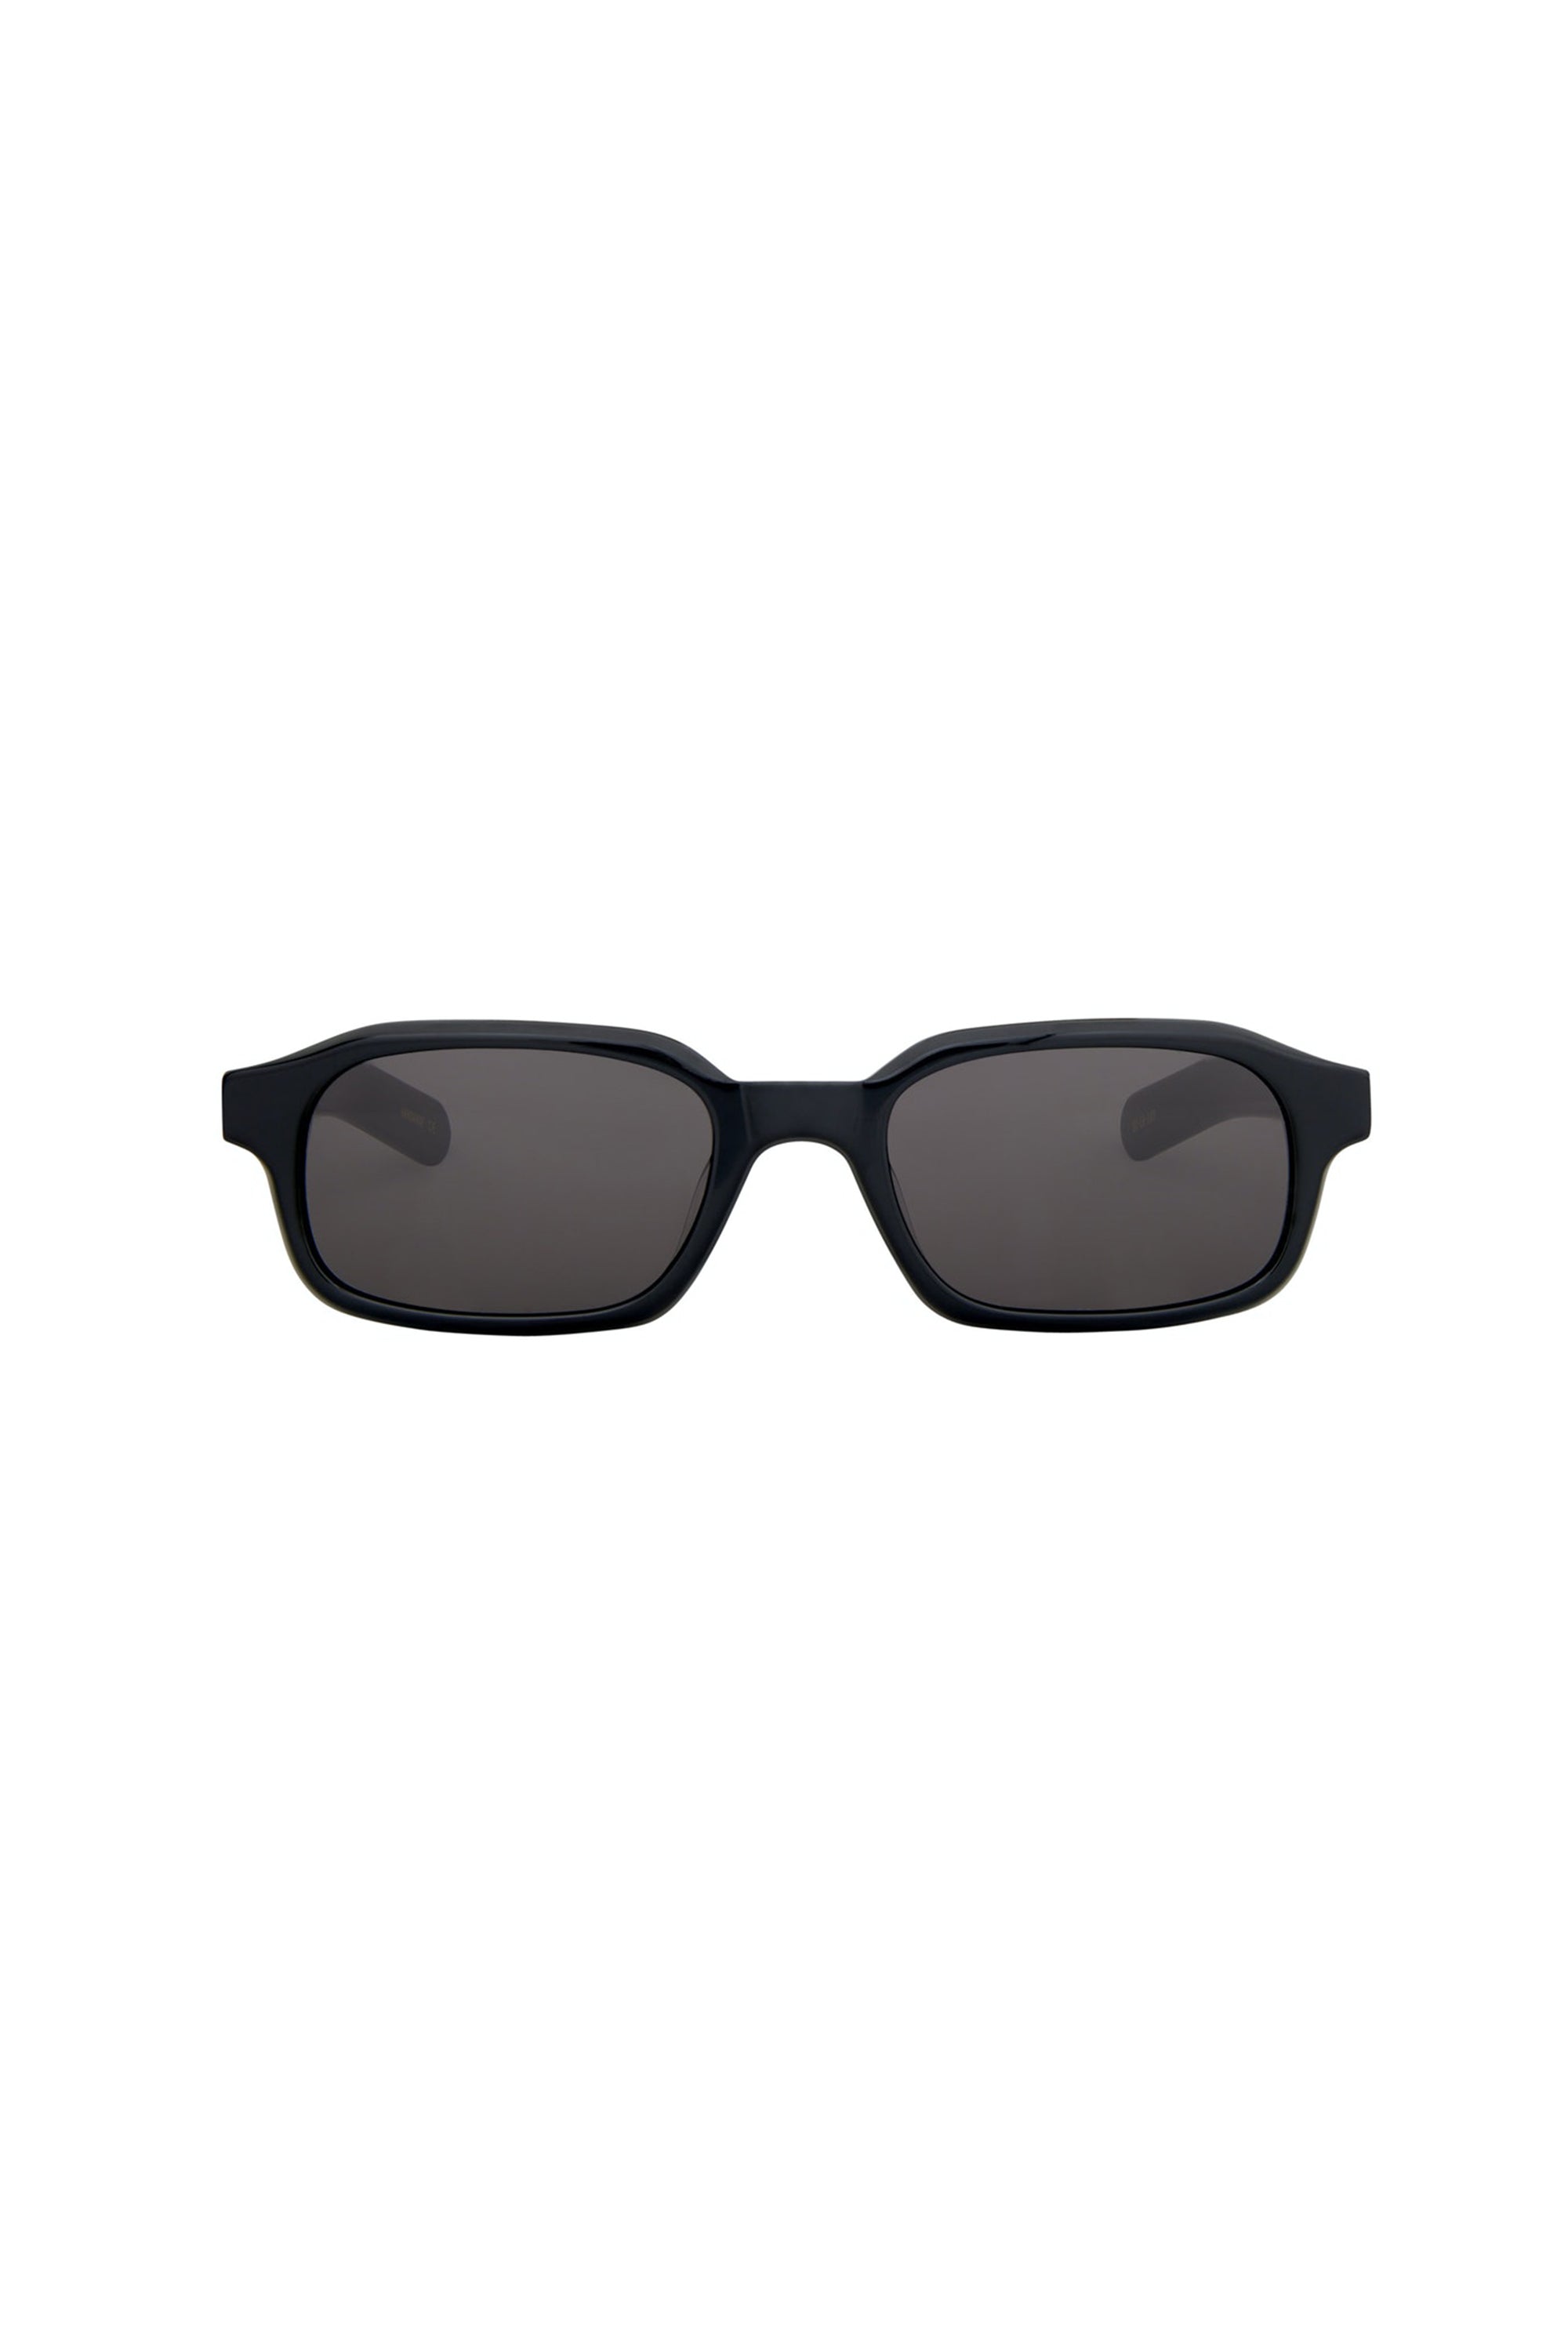 Flatlist Eyewear - Hanky Solid Black/Solid Black